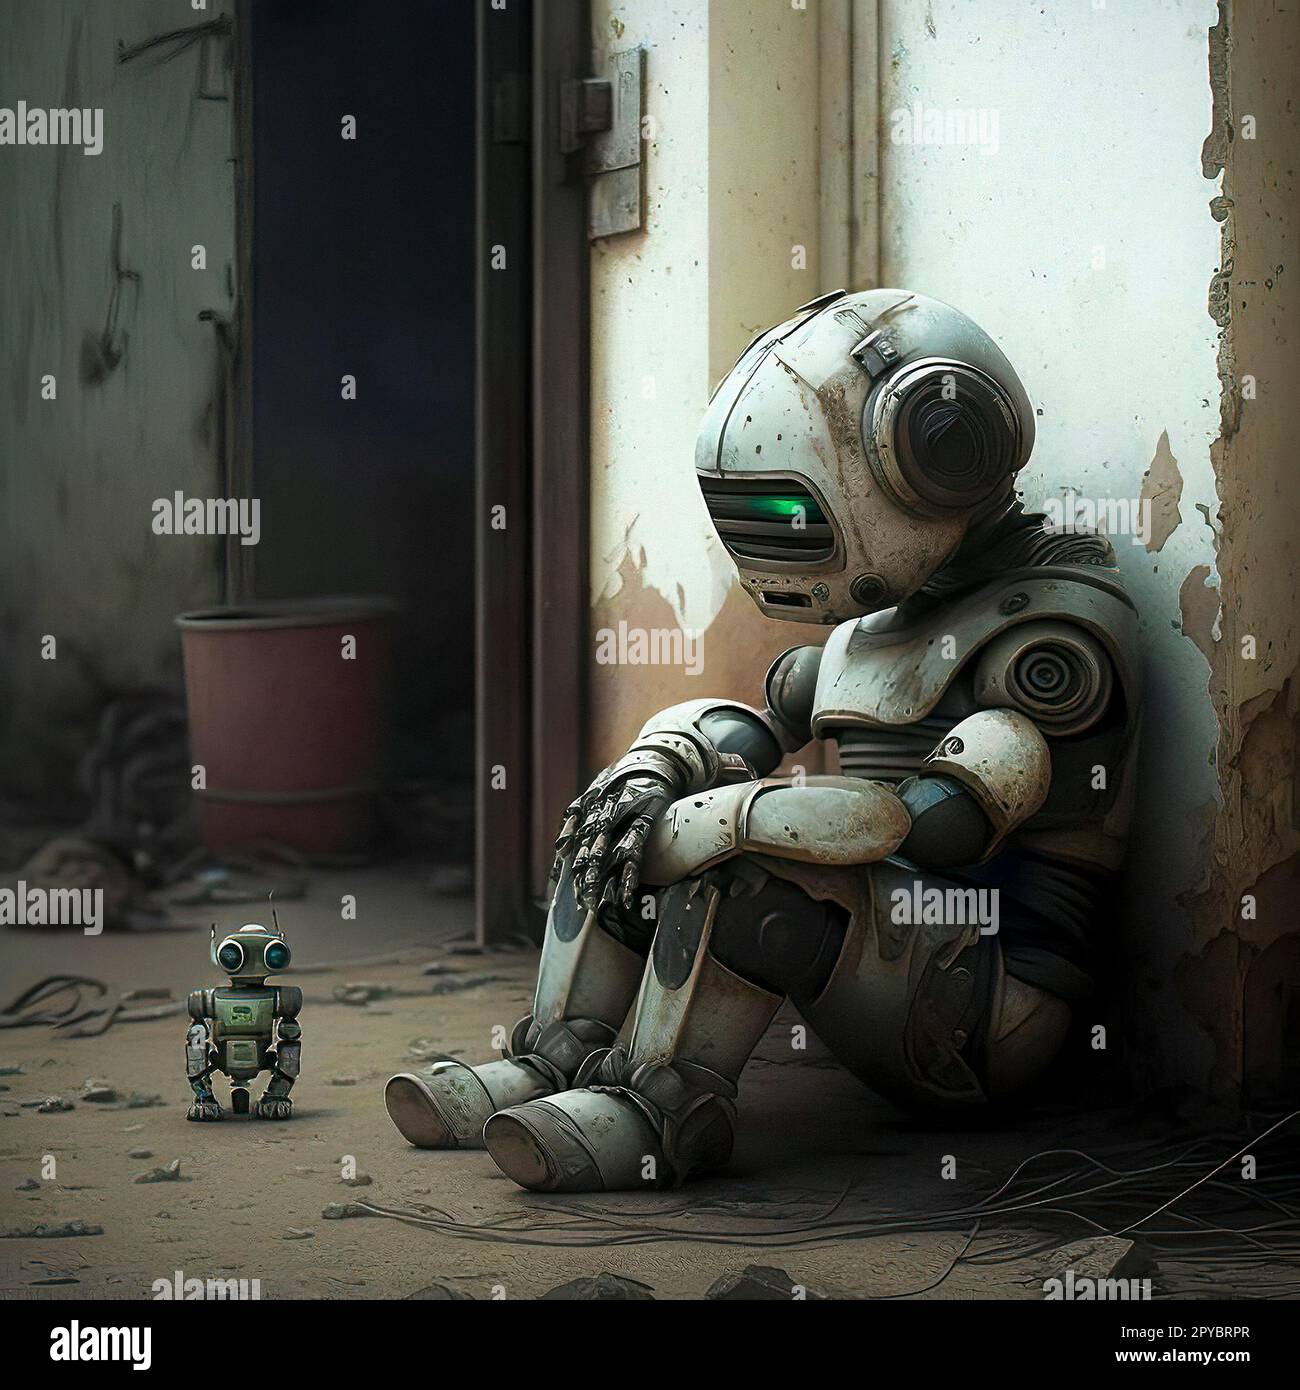 Dystopian Art Sad Robot Sitting on the Ground next to a Small Robot Stock Photo Alamy